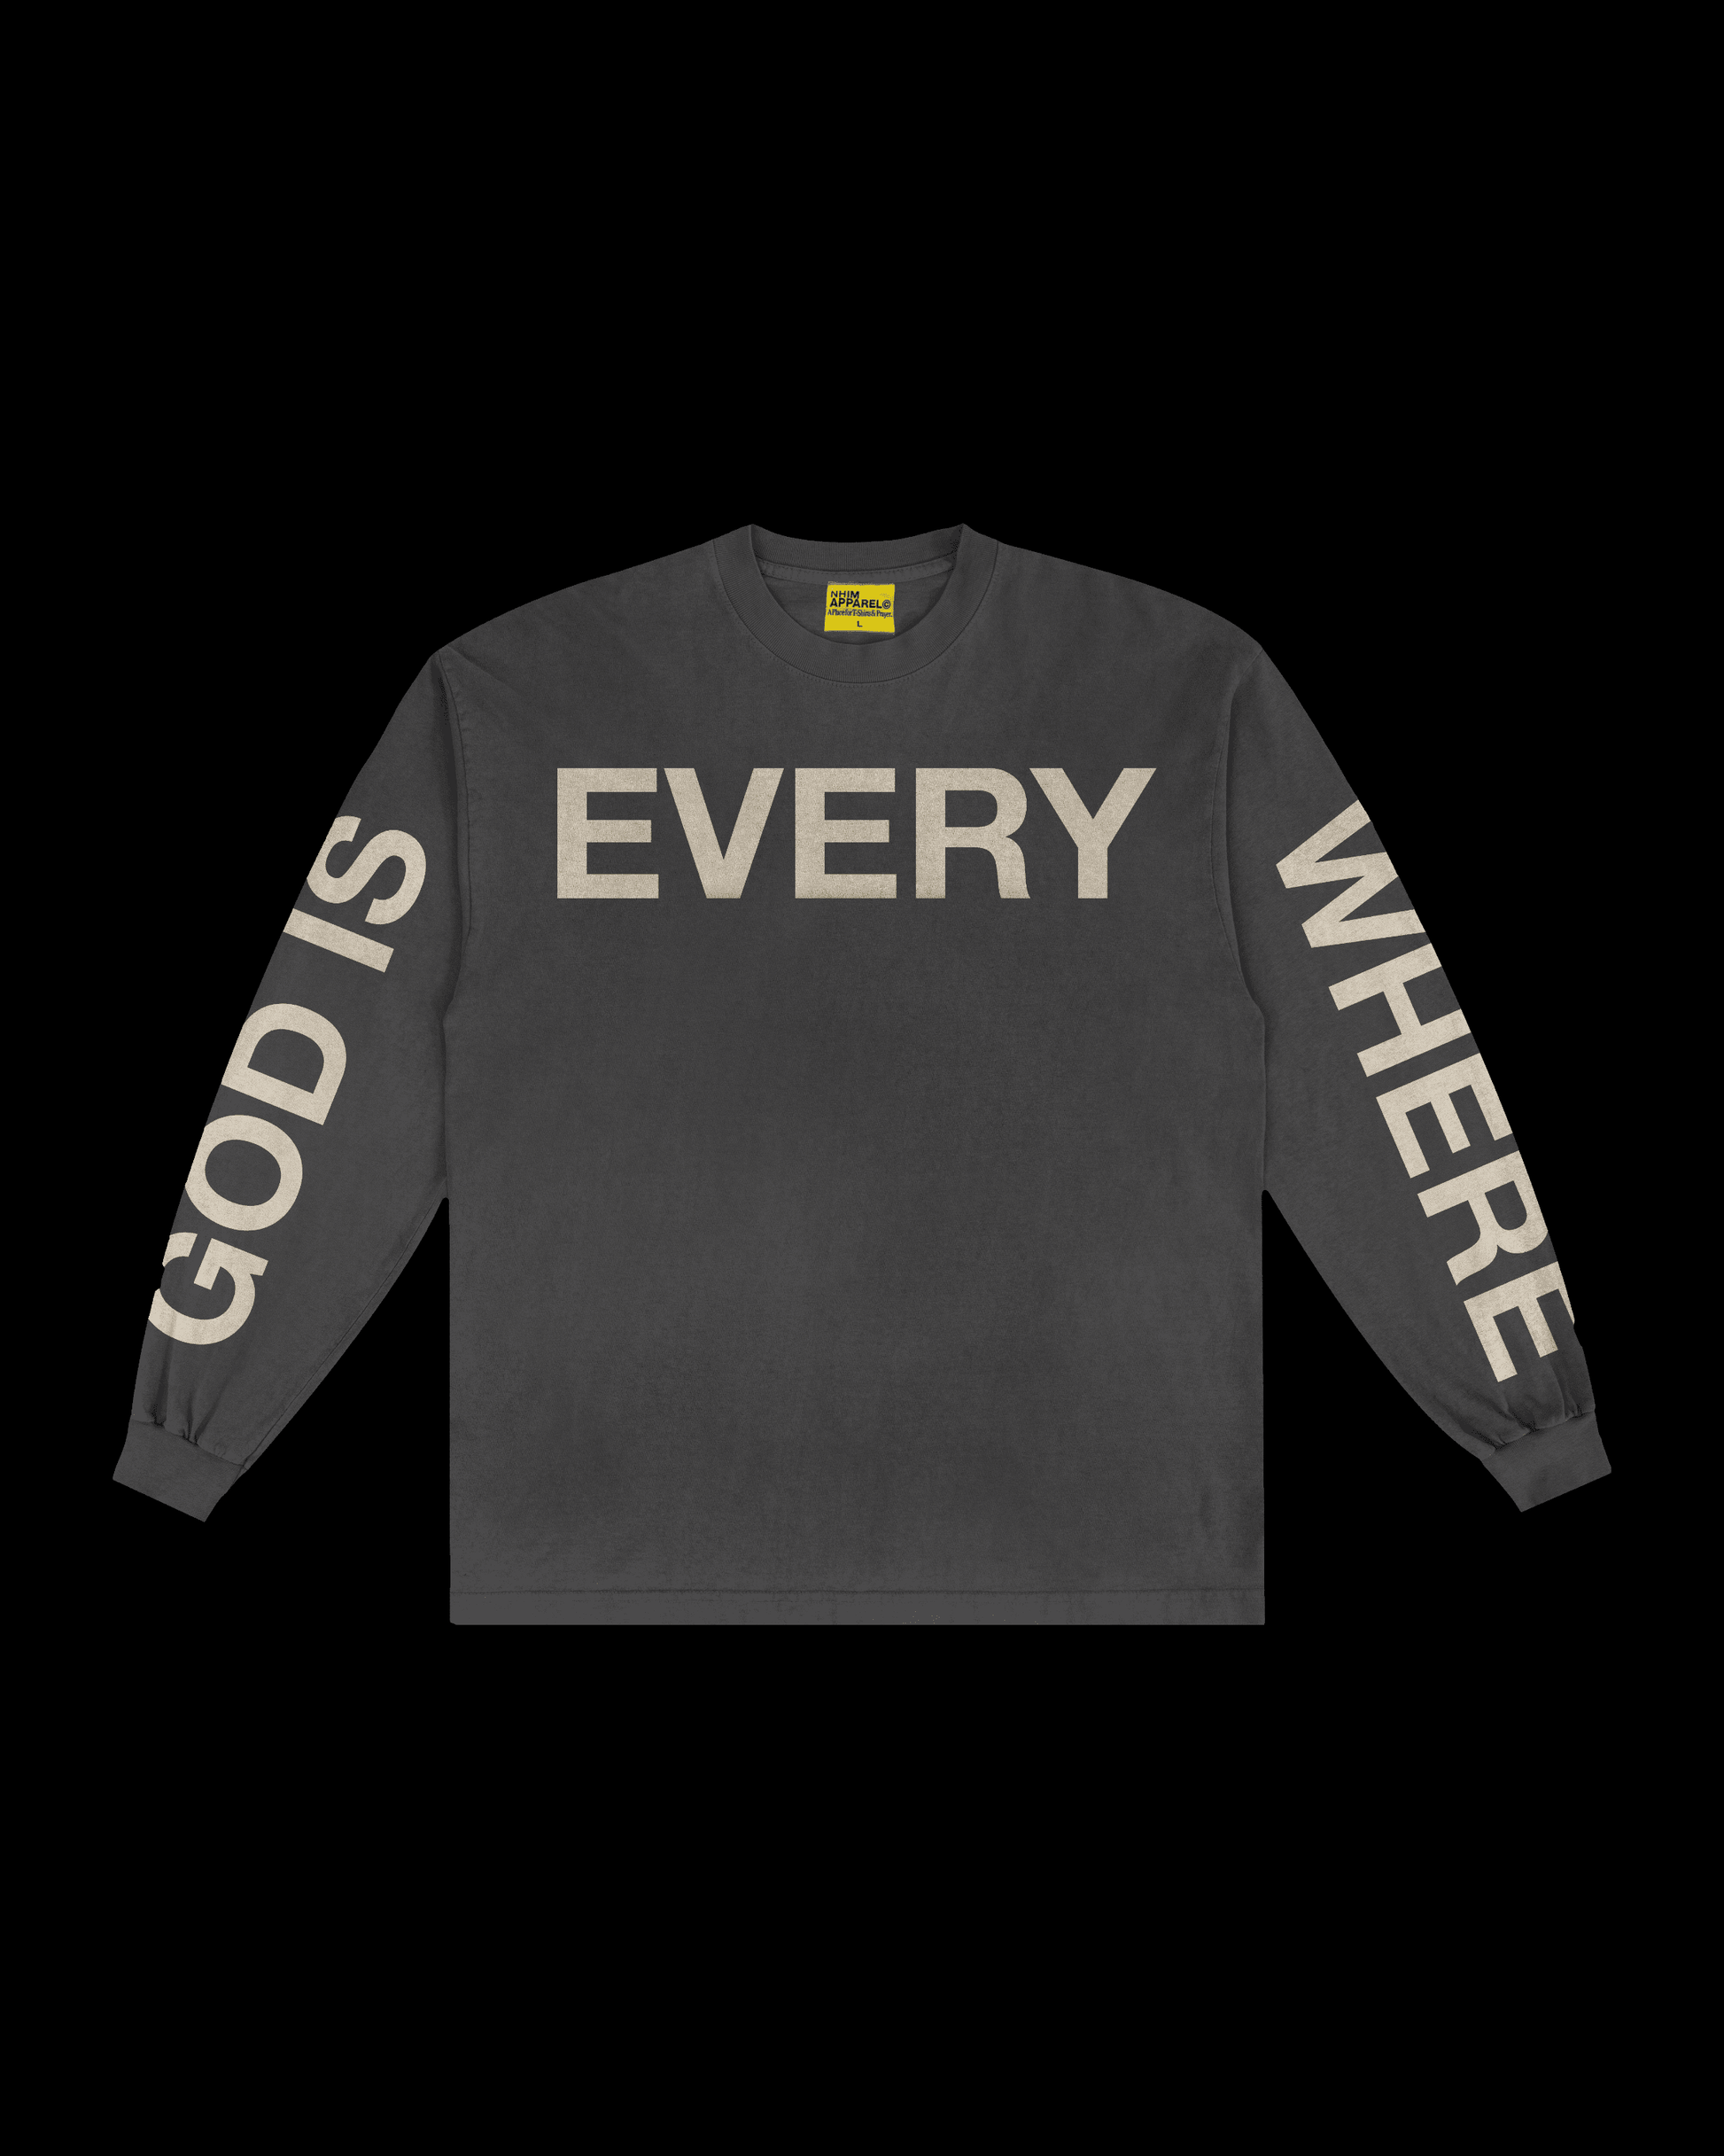 God is Everywhere long sleeve shirt by NHIM Apparel Christian clothing brand